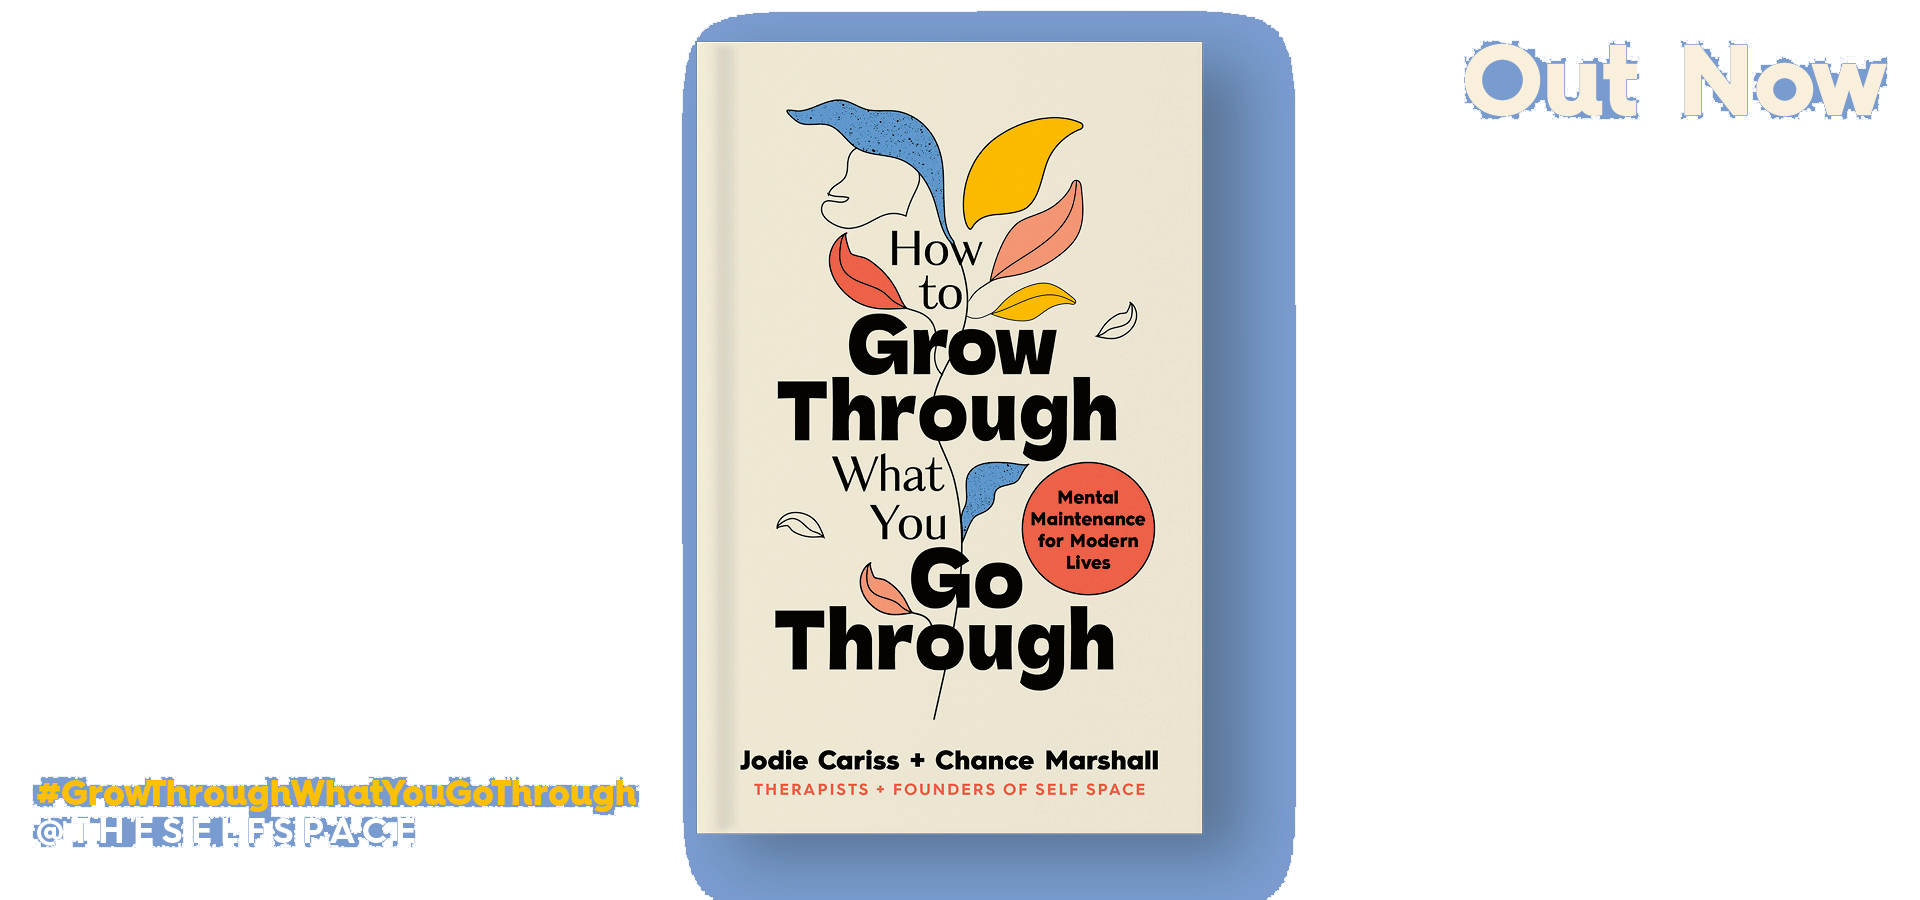 How to Grow Through what you go through book